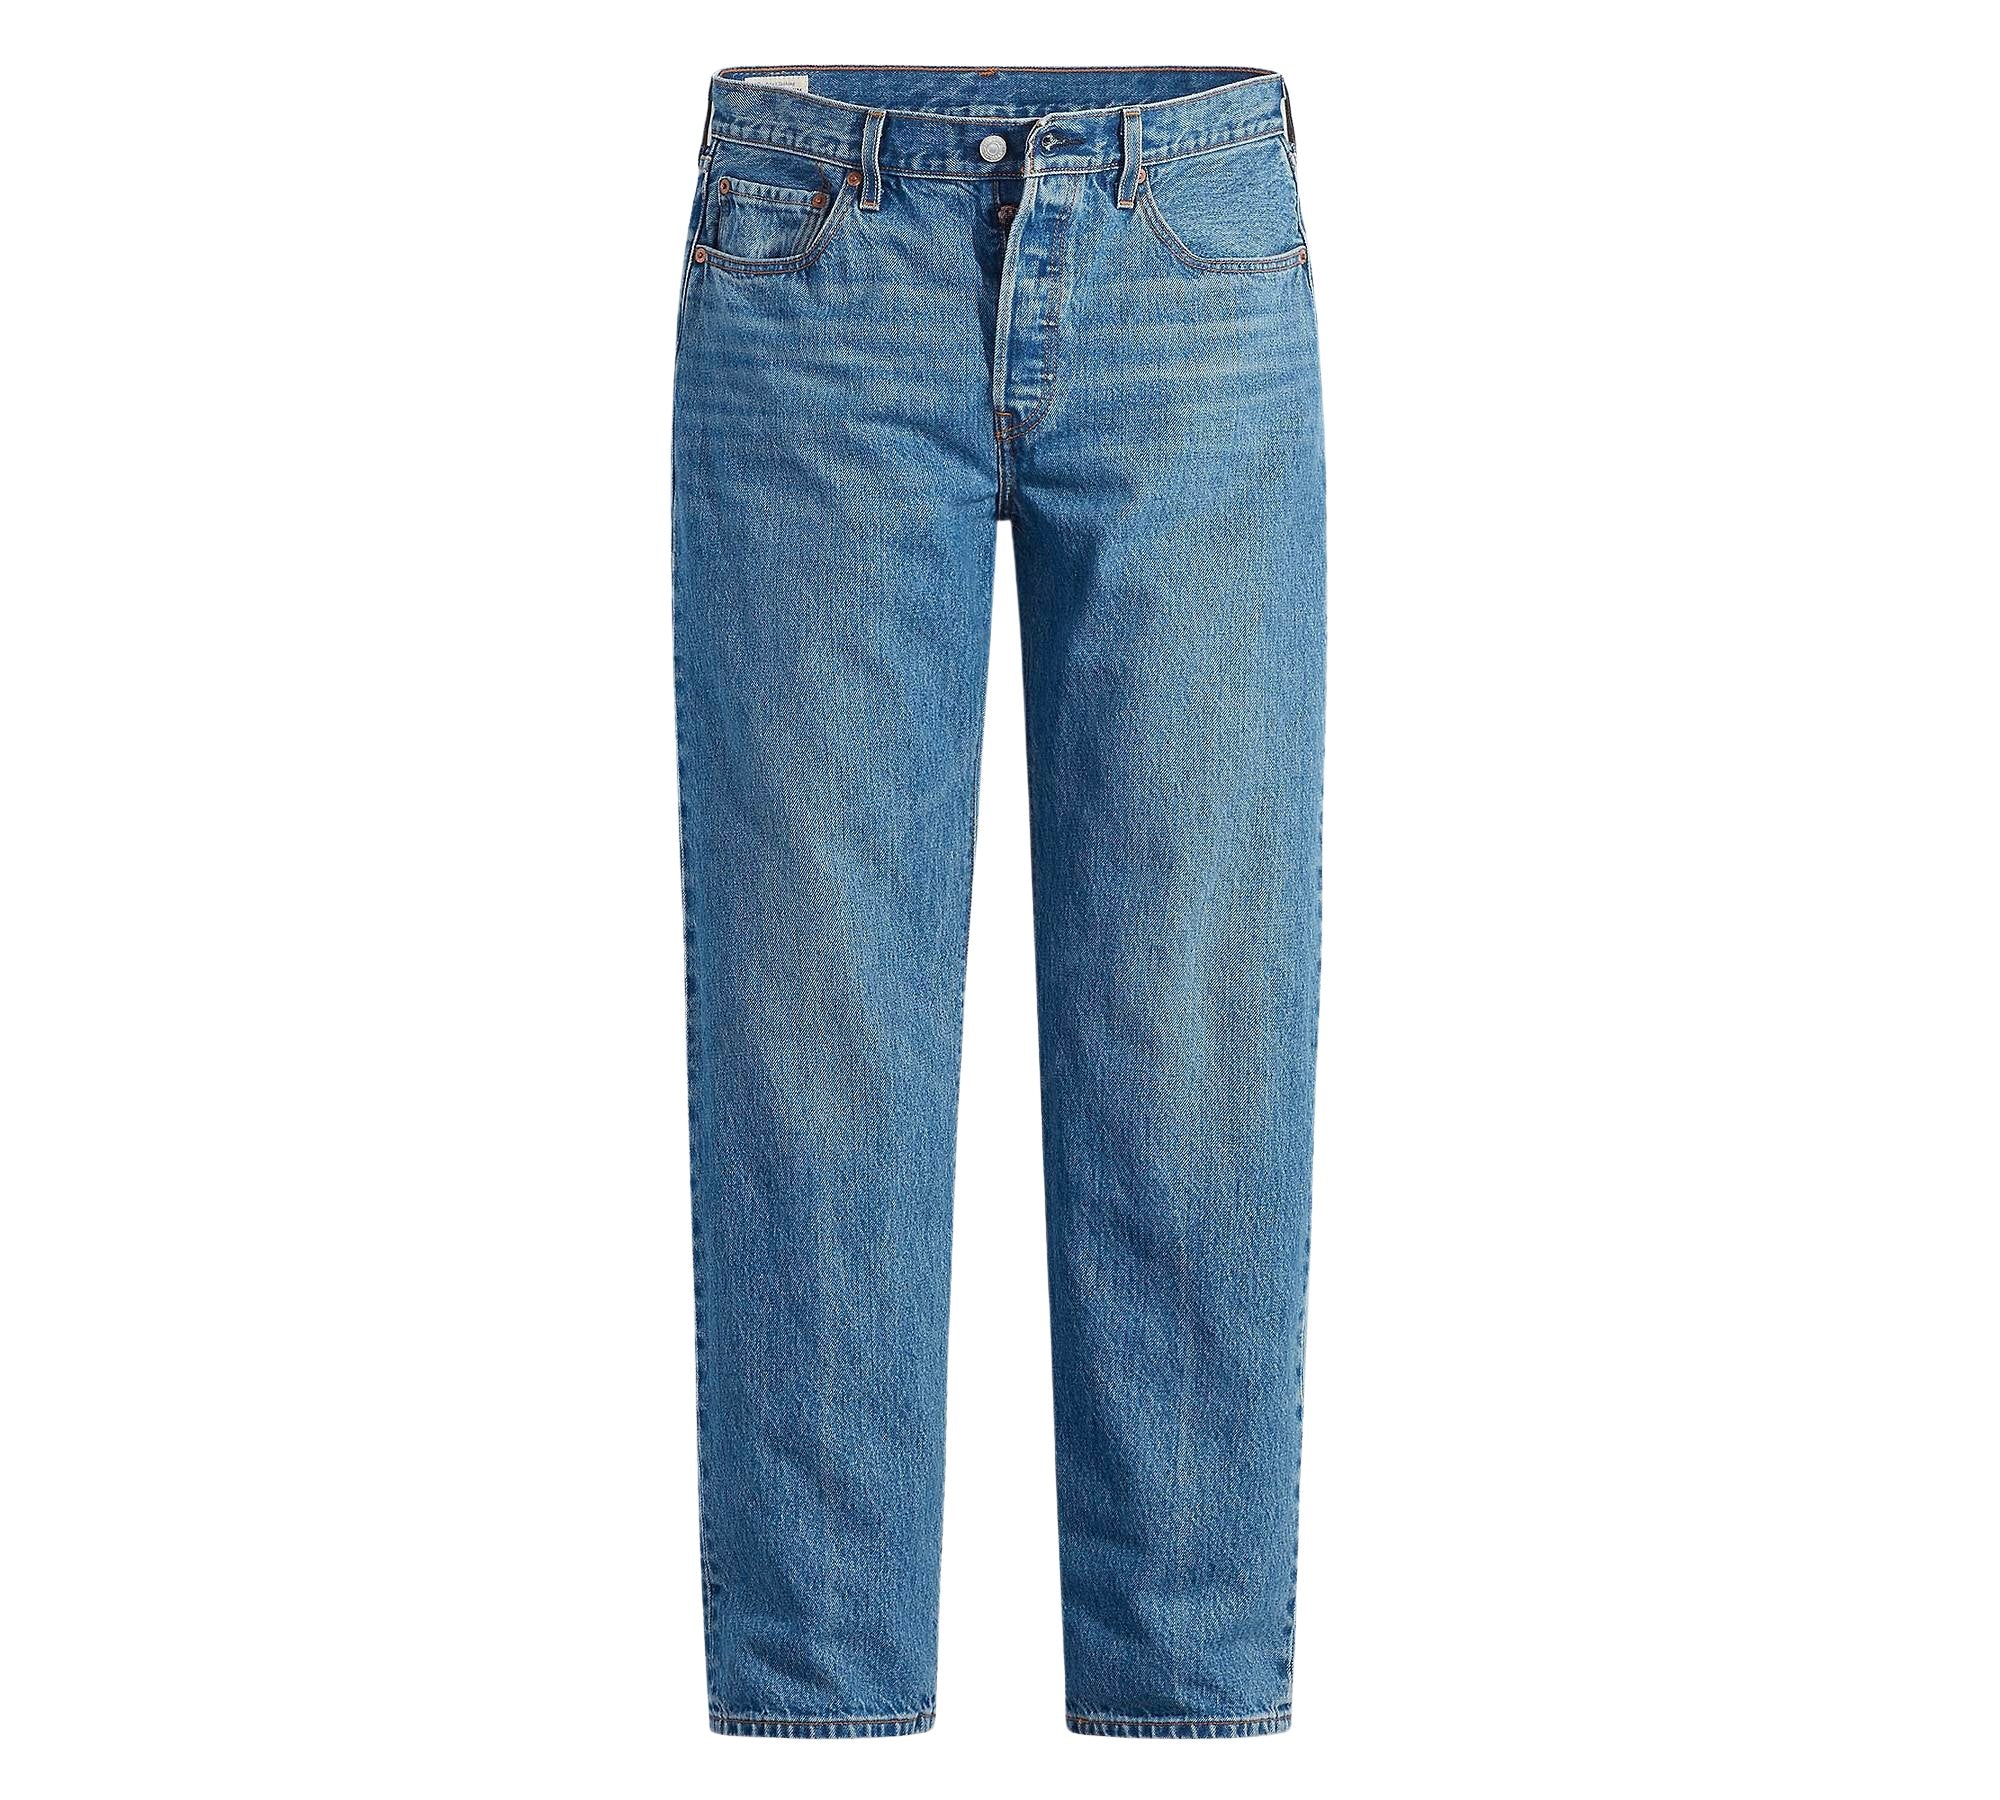 4 Pack - Vintage LEVI'S Classic Blue Zip Fly Jeans - Waist 31 - Length 30 - Vintage Superstore Online